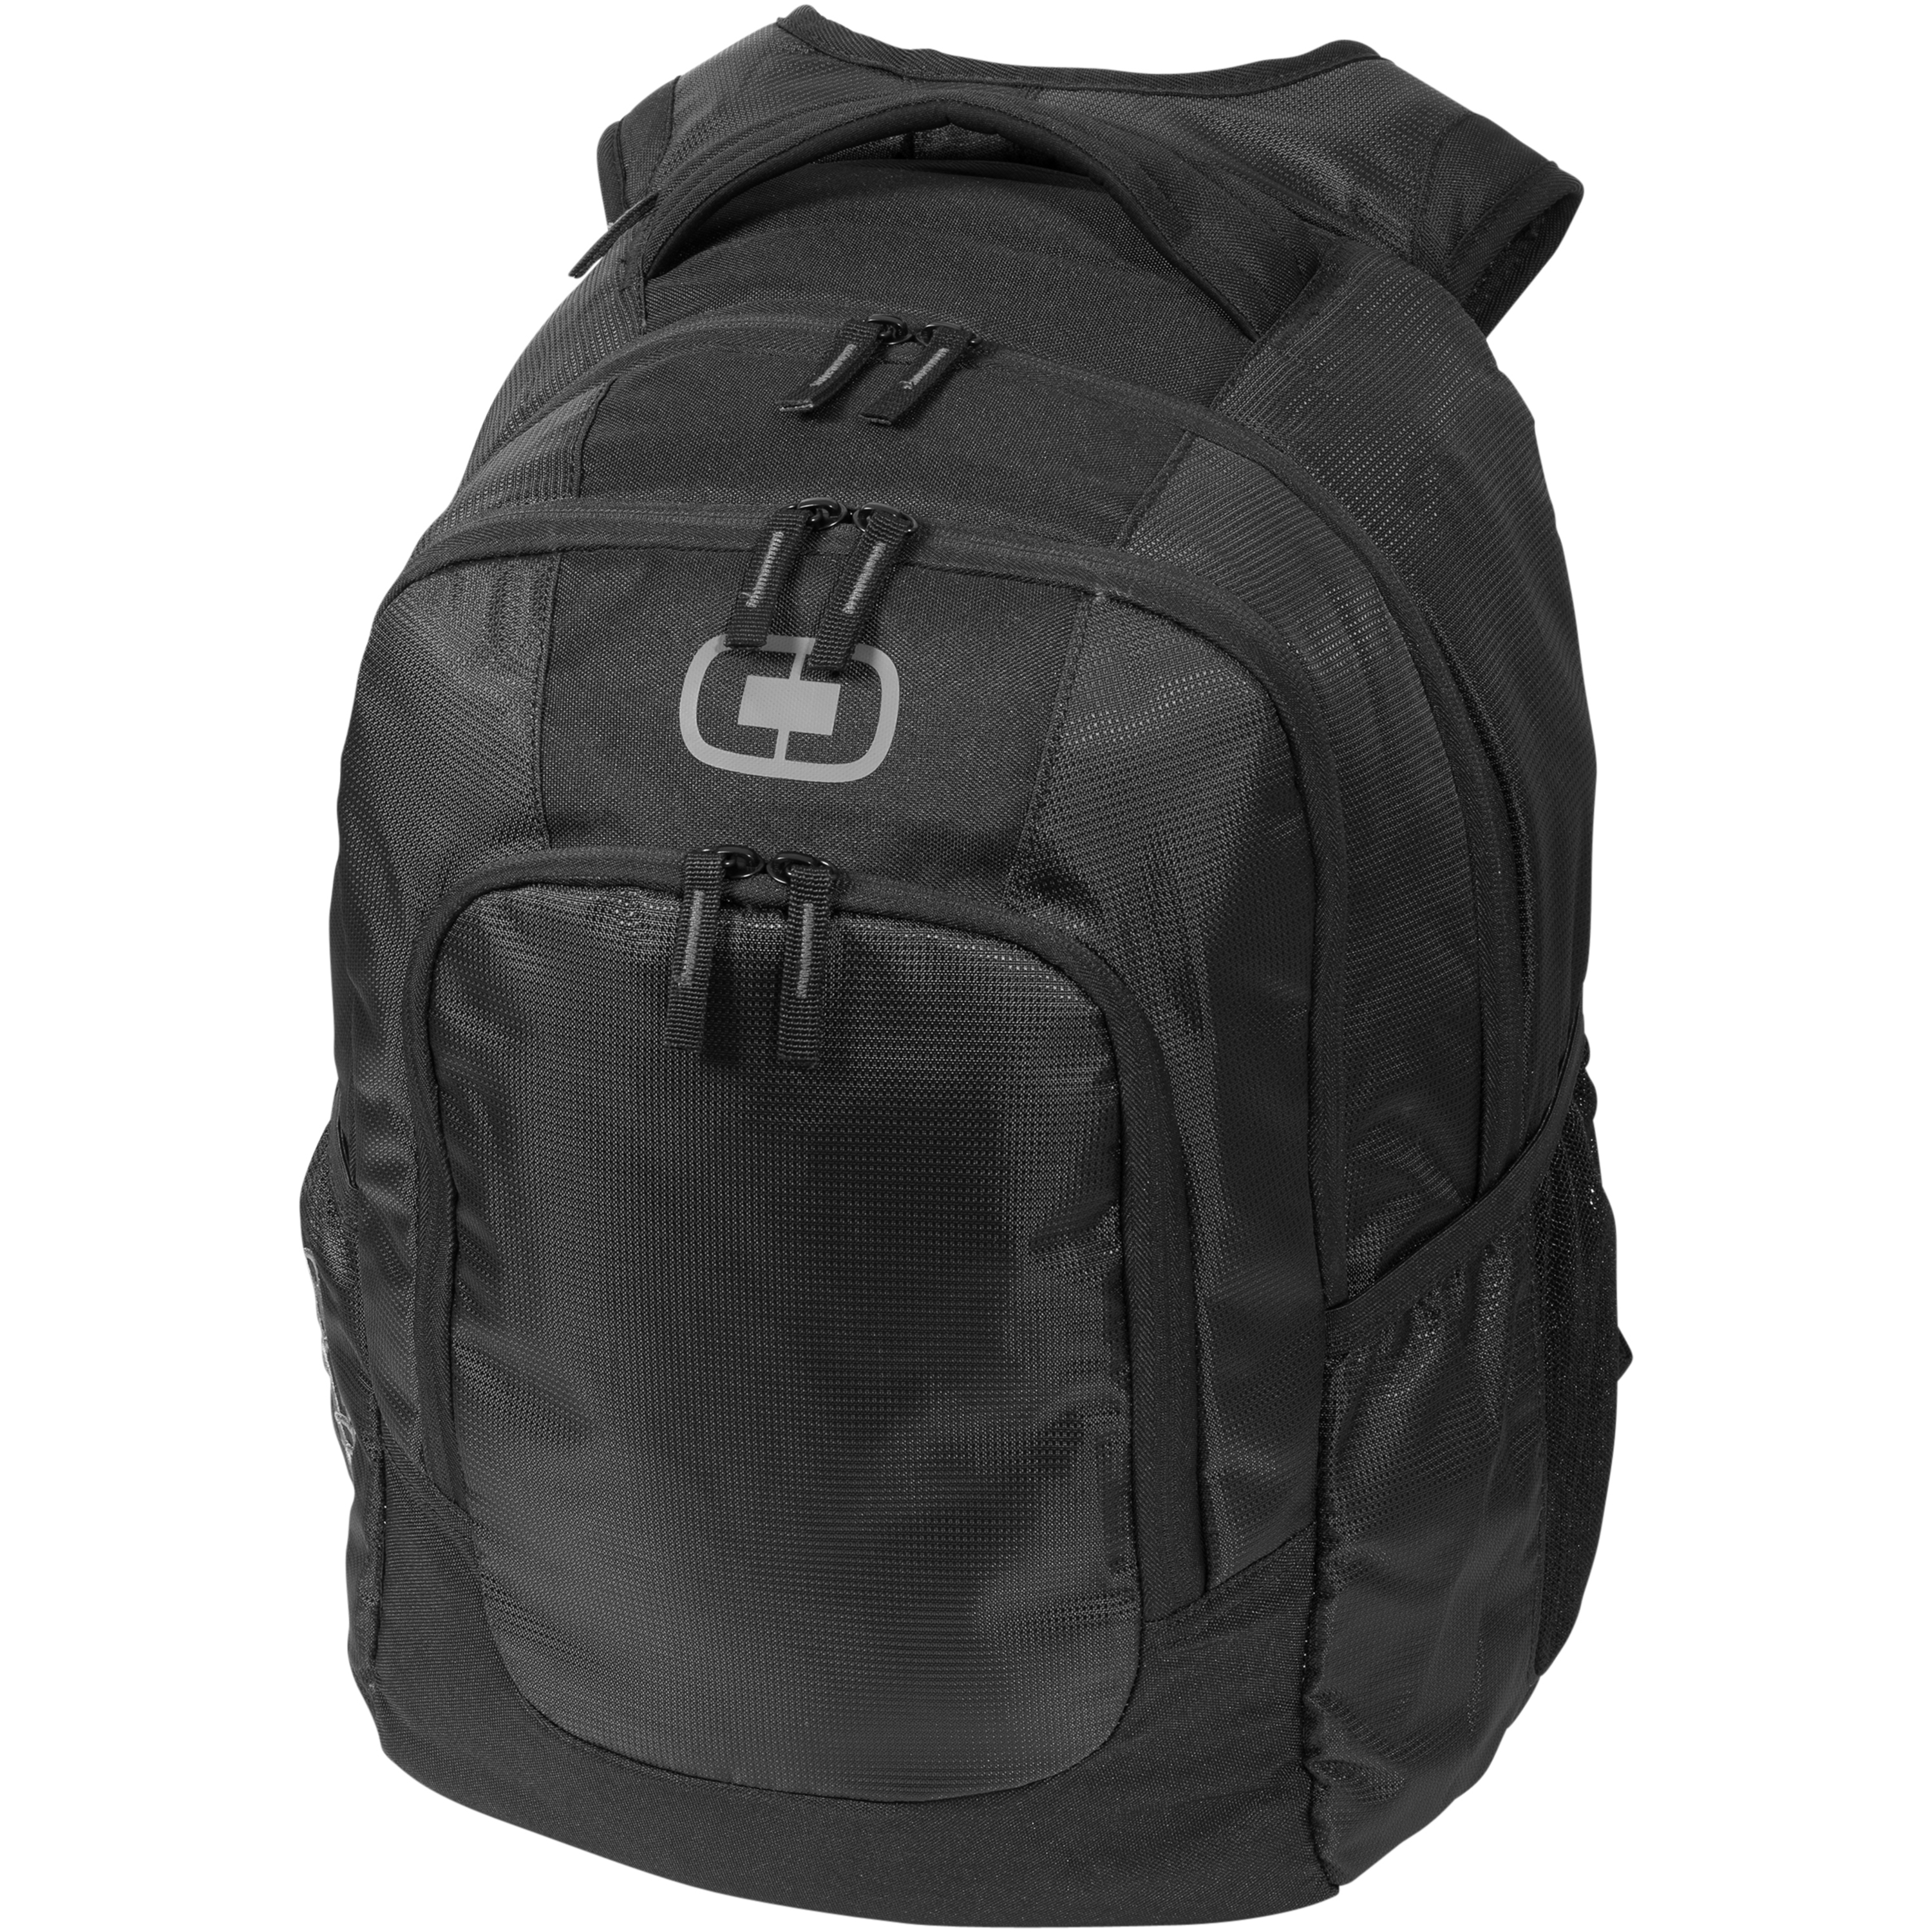 Logan 15.6" laptop backpack 30L